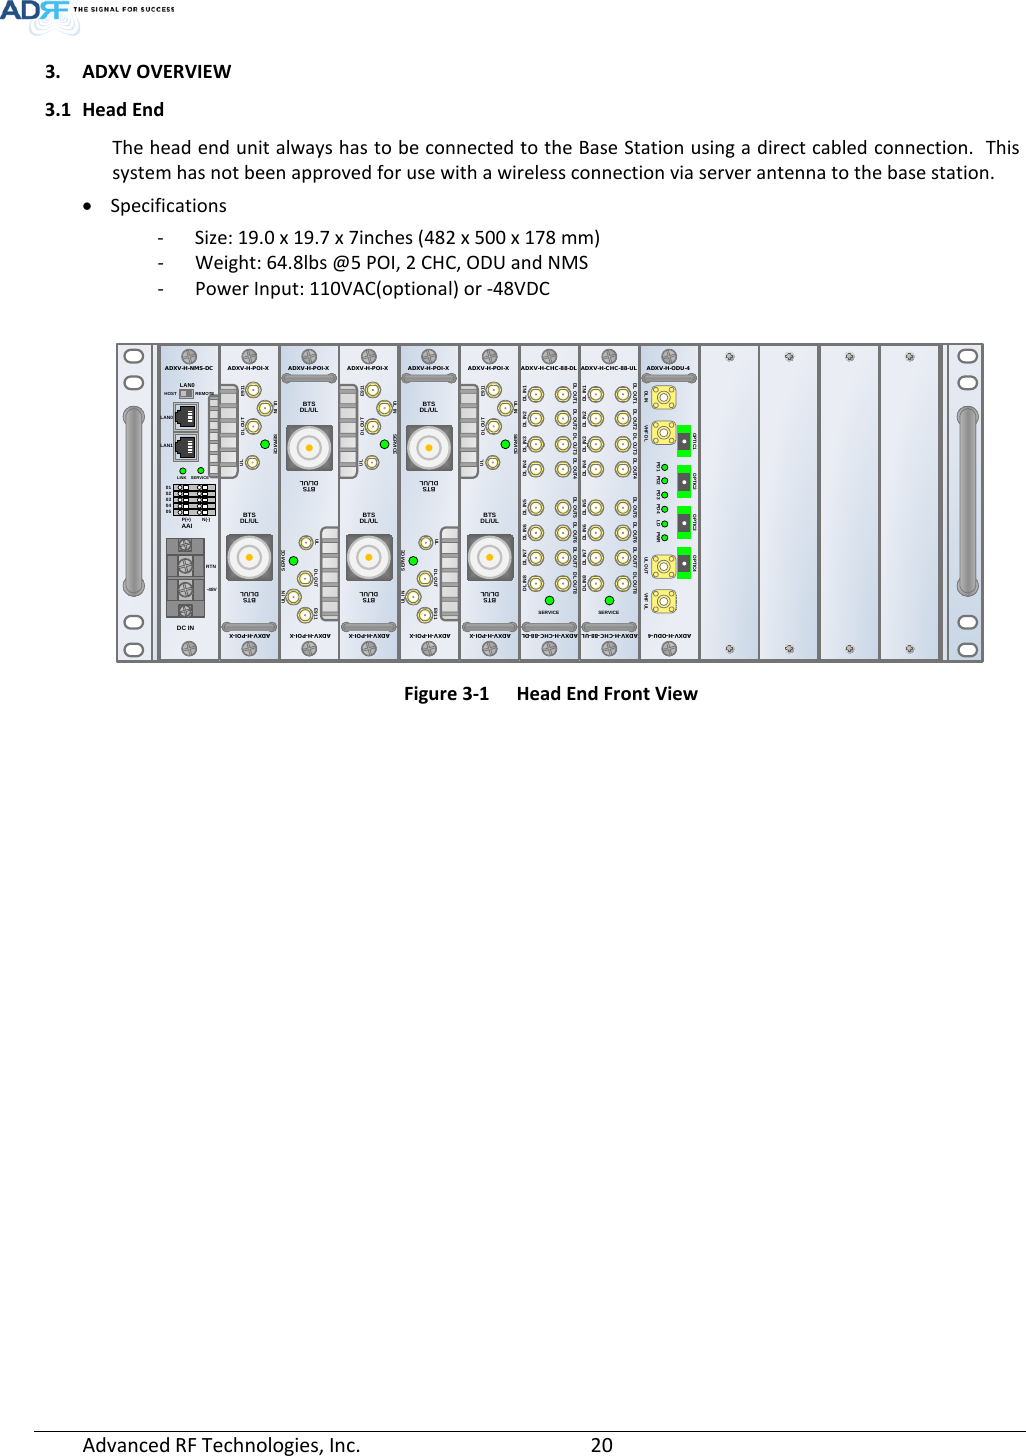 Page 20 of ADRF KOREA ADXV-R-336 DAS (Distributed Antenna System) User Manual ADXV DAS